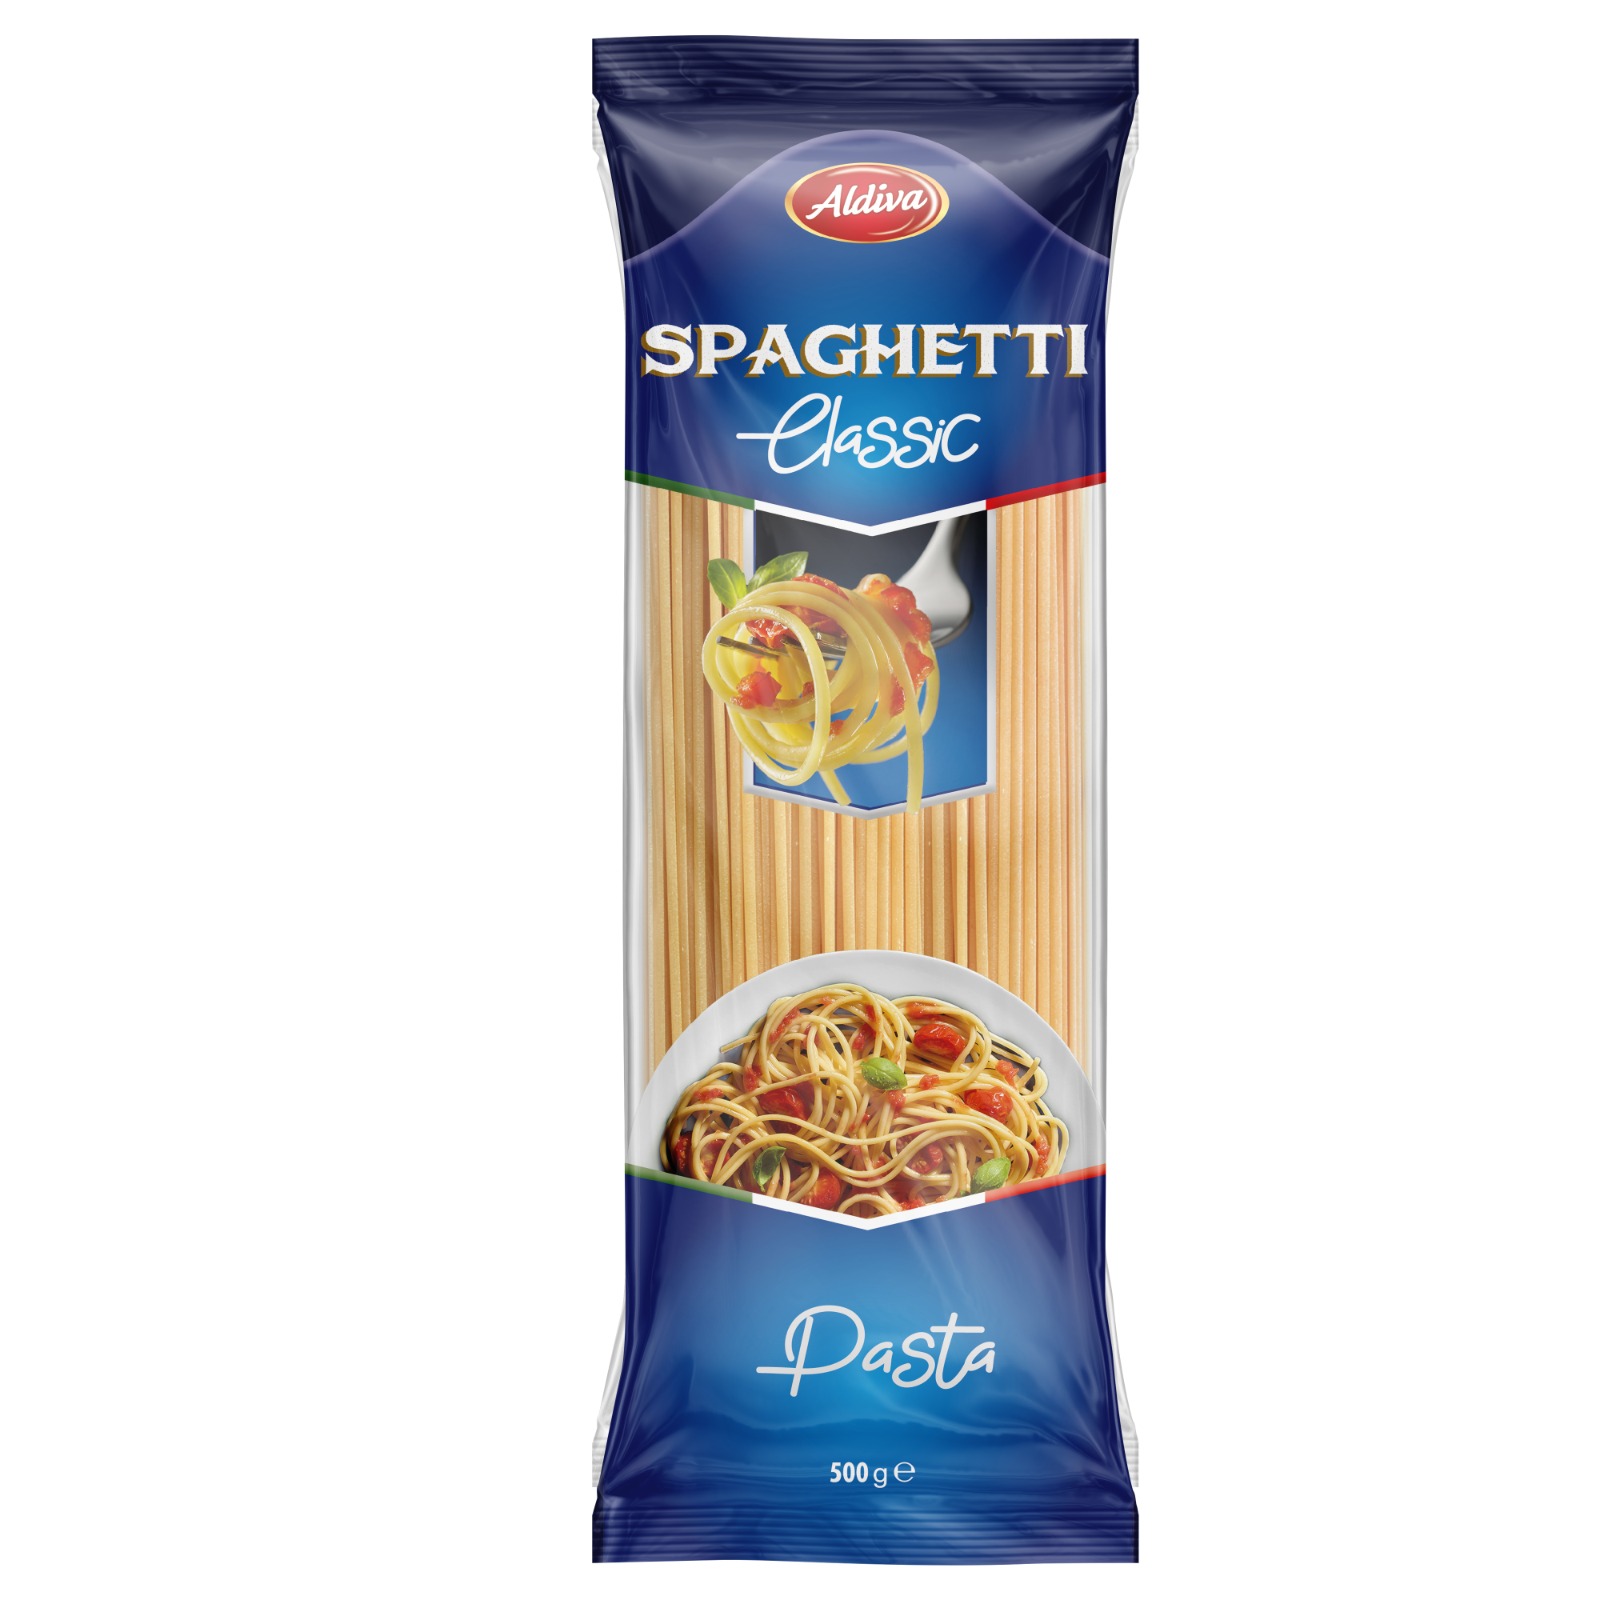 Aldiva Spaghetti Makarna 500g